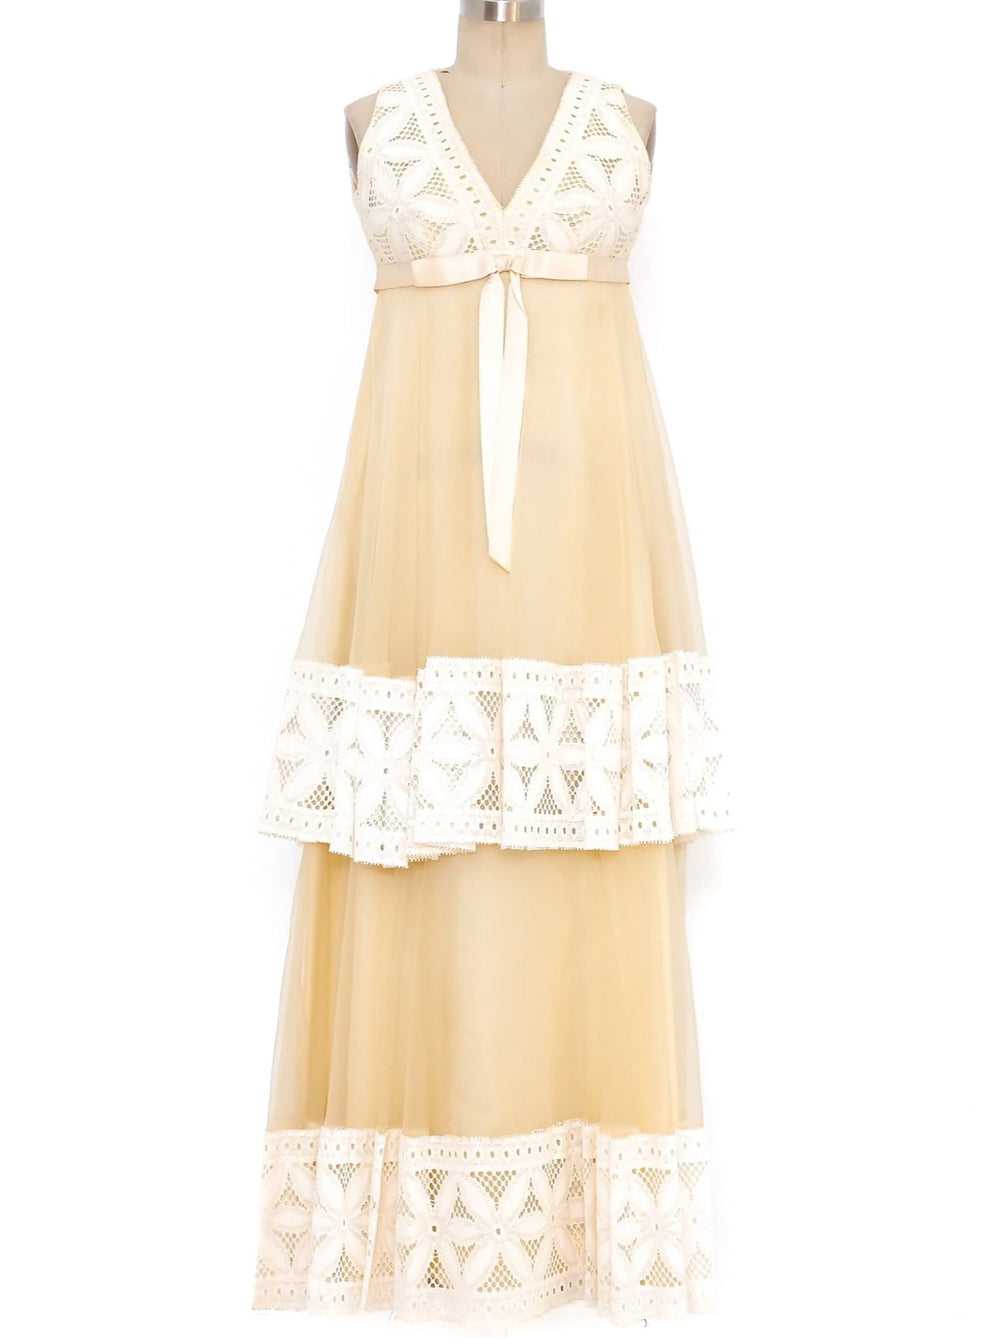 Jean Varon Lace Trimmed Chiffon Dress - image 1